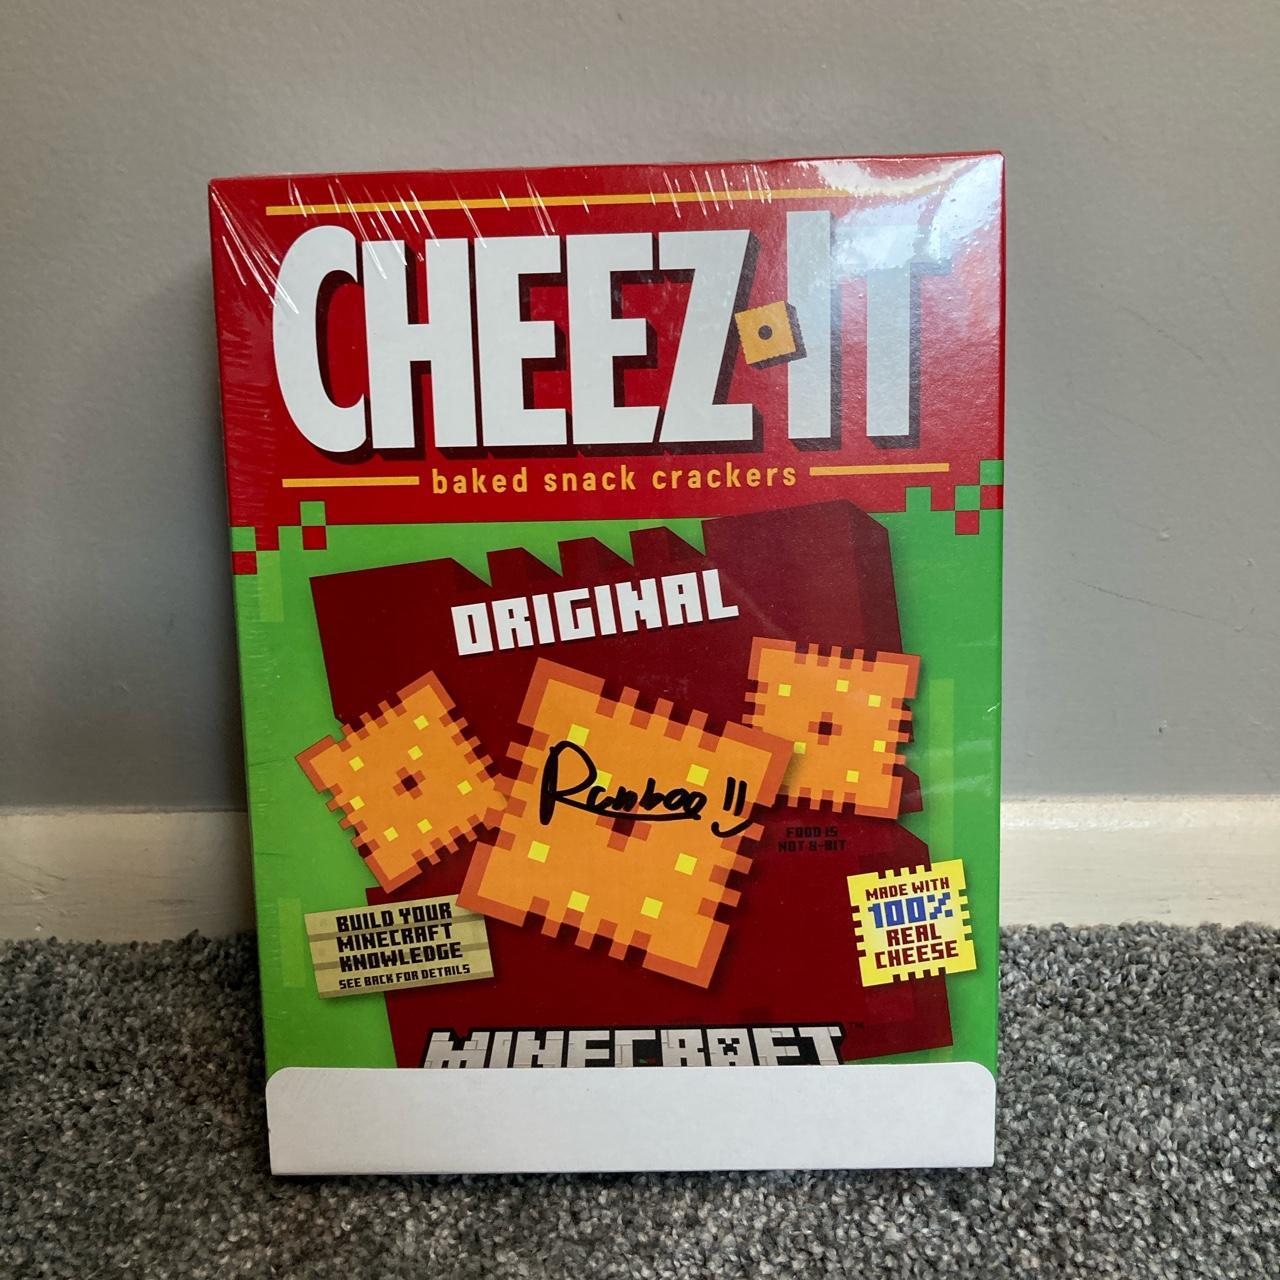 Never opened before Ranboo signed CheezIT box. I... - Depop